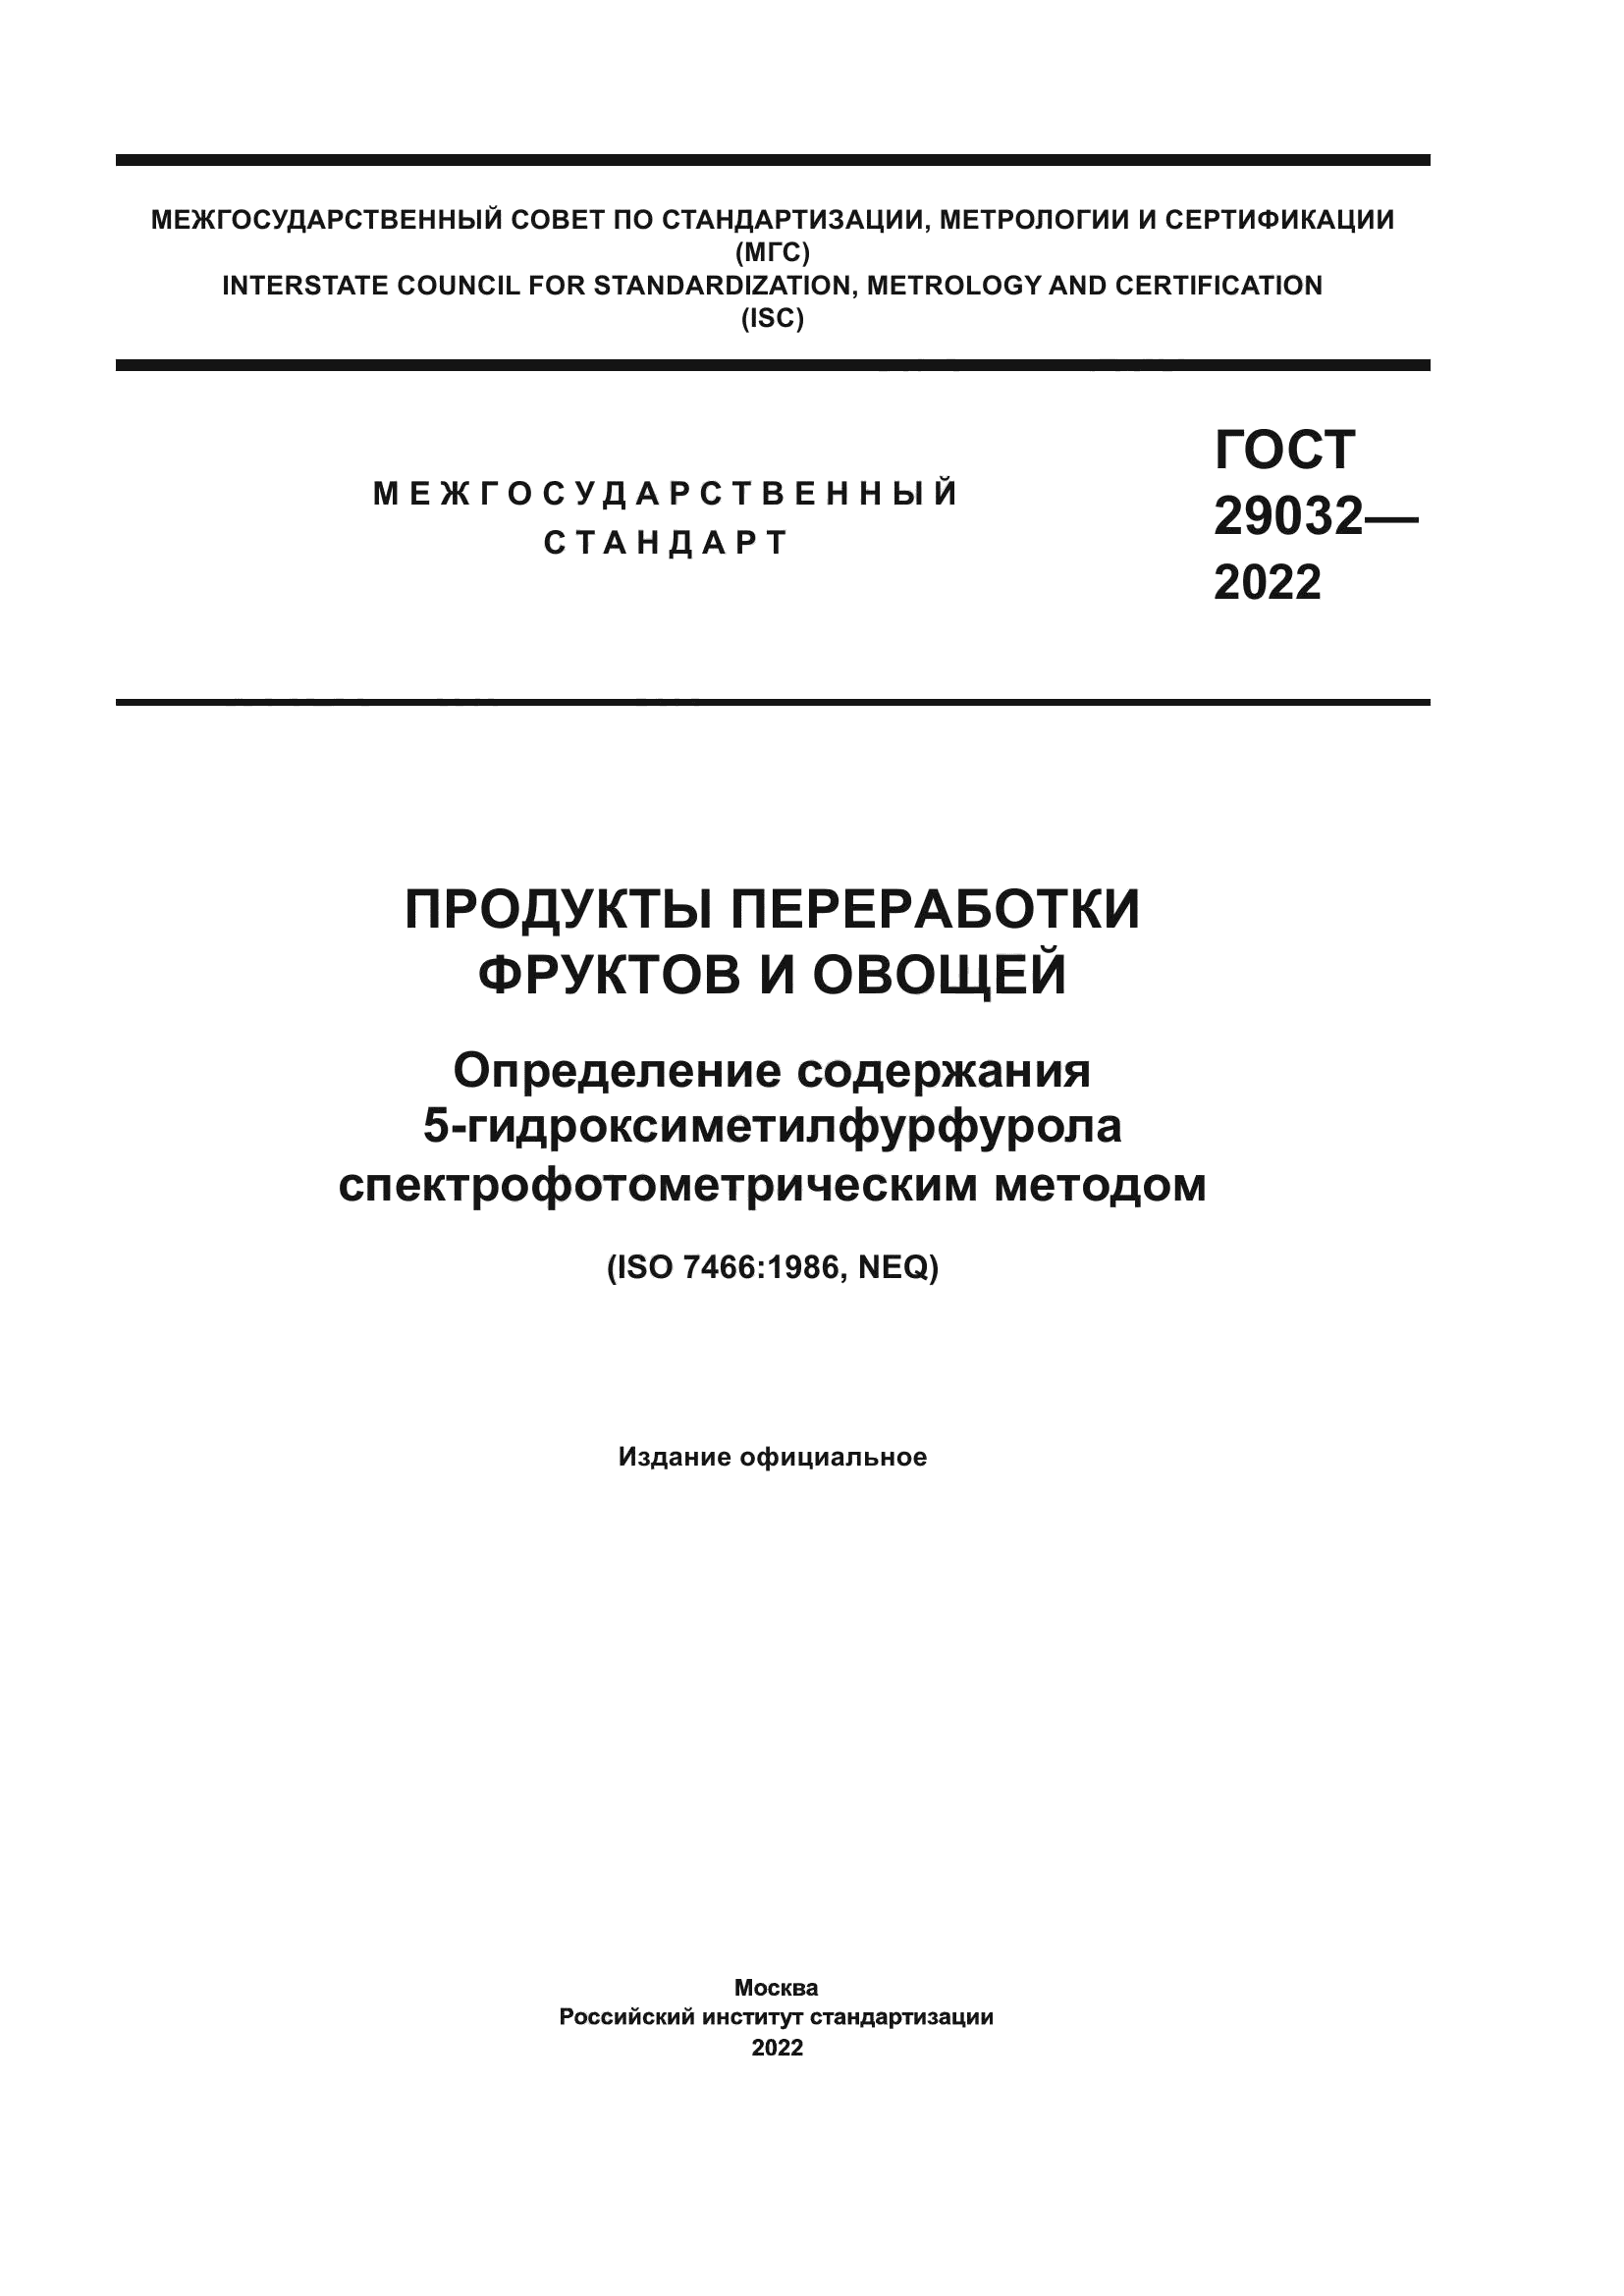 ГОСТ 29032-2022